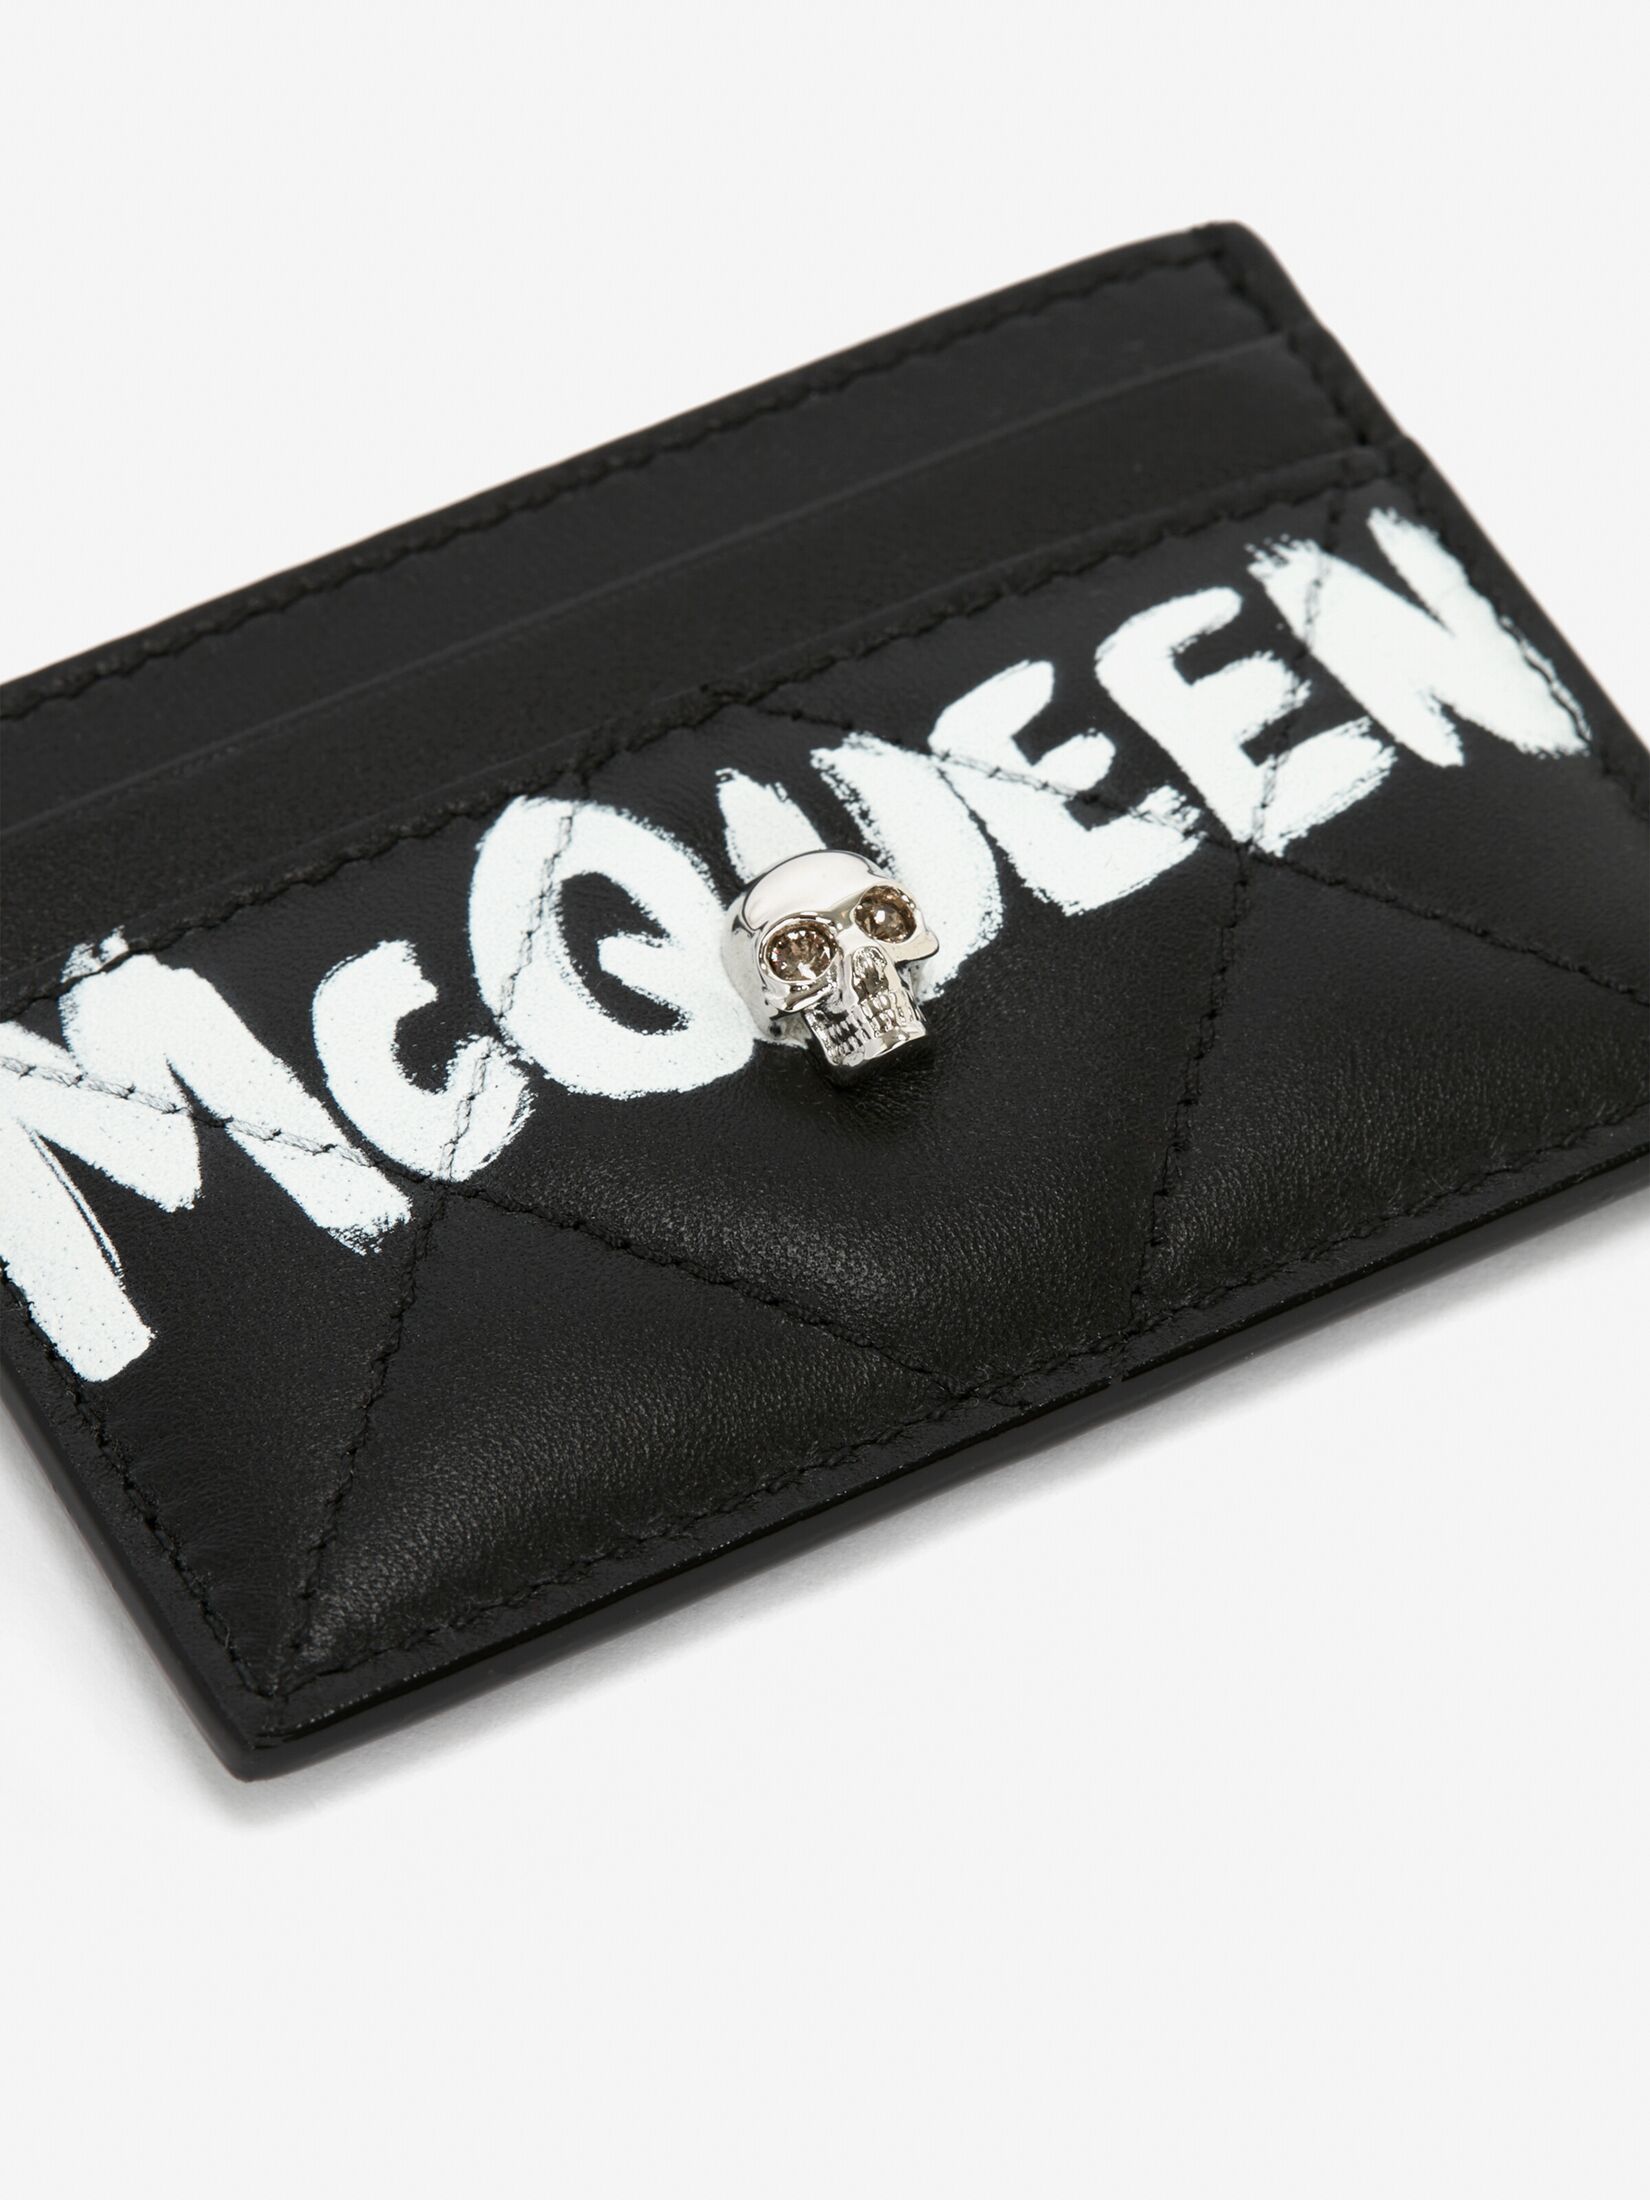 Kartenetui mit McQueen-Graffiti-Motiv